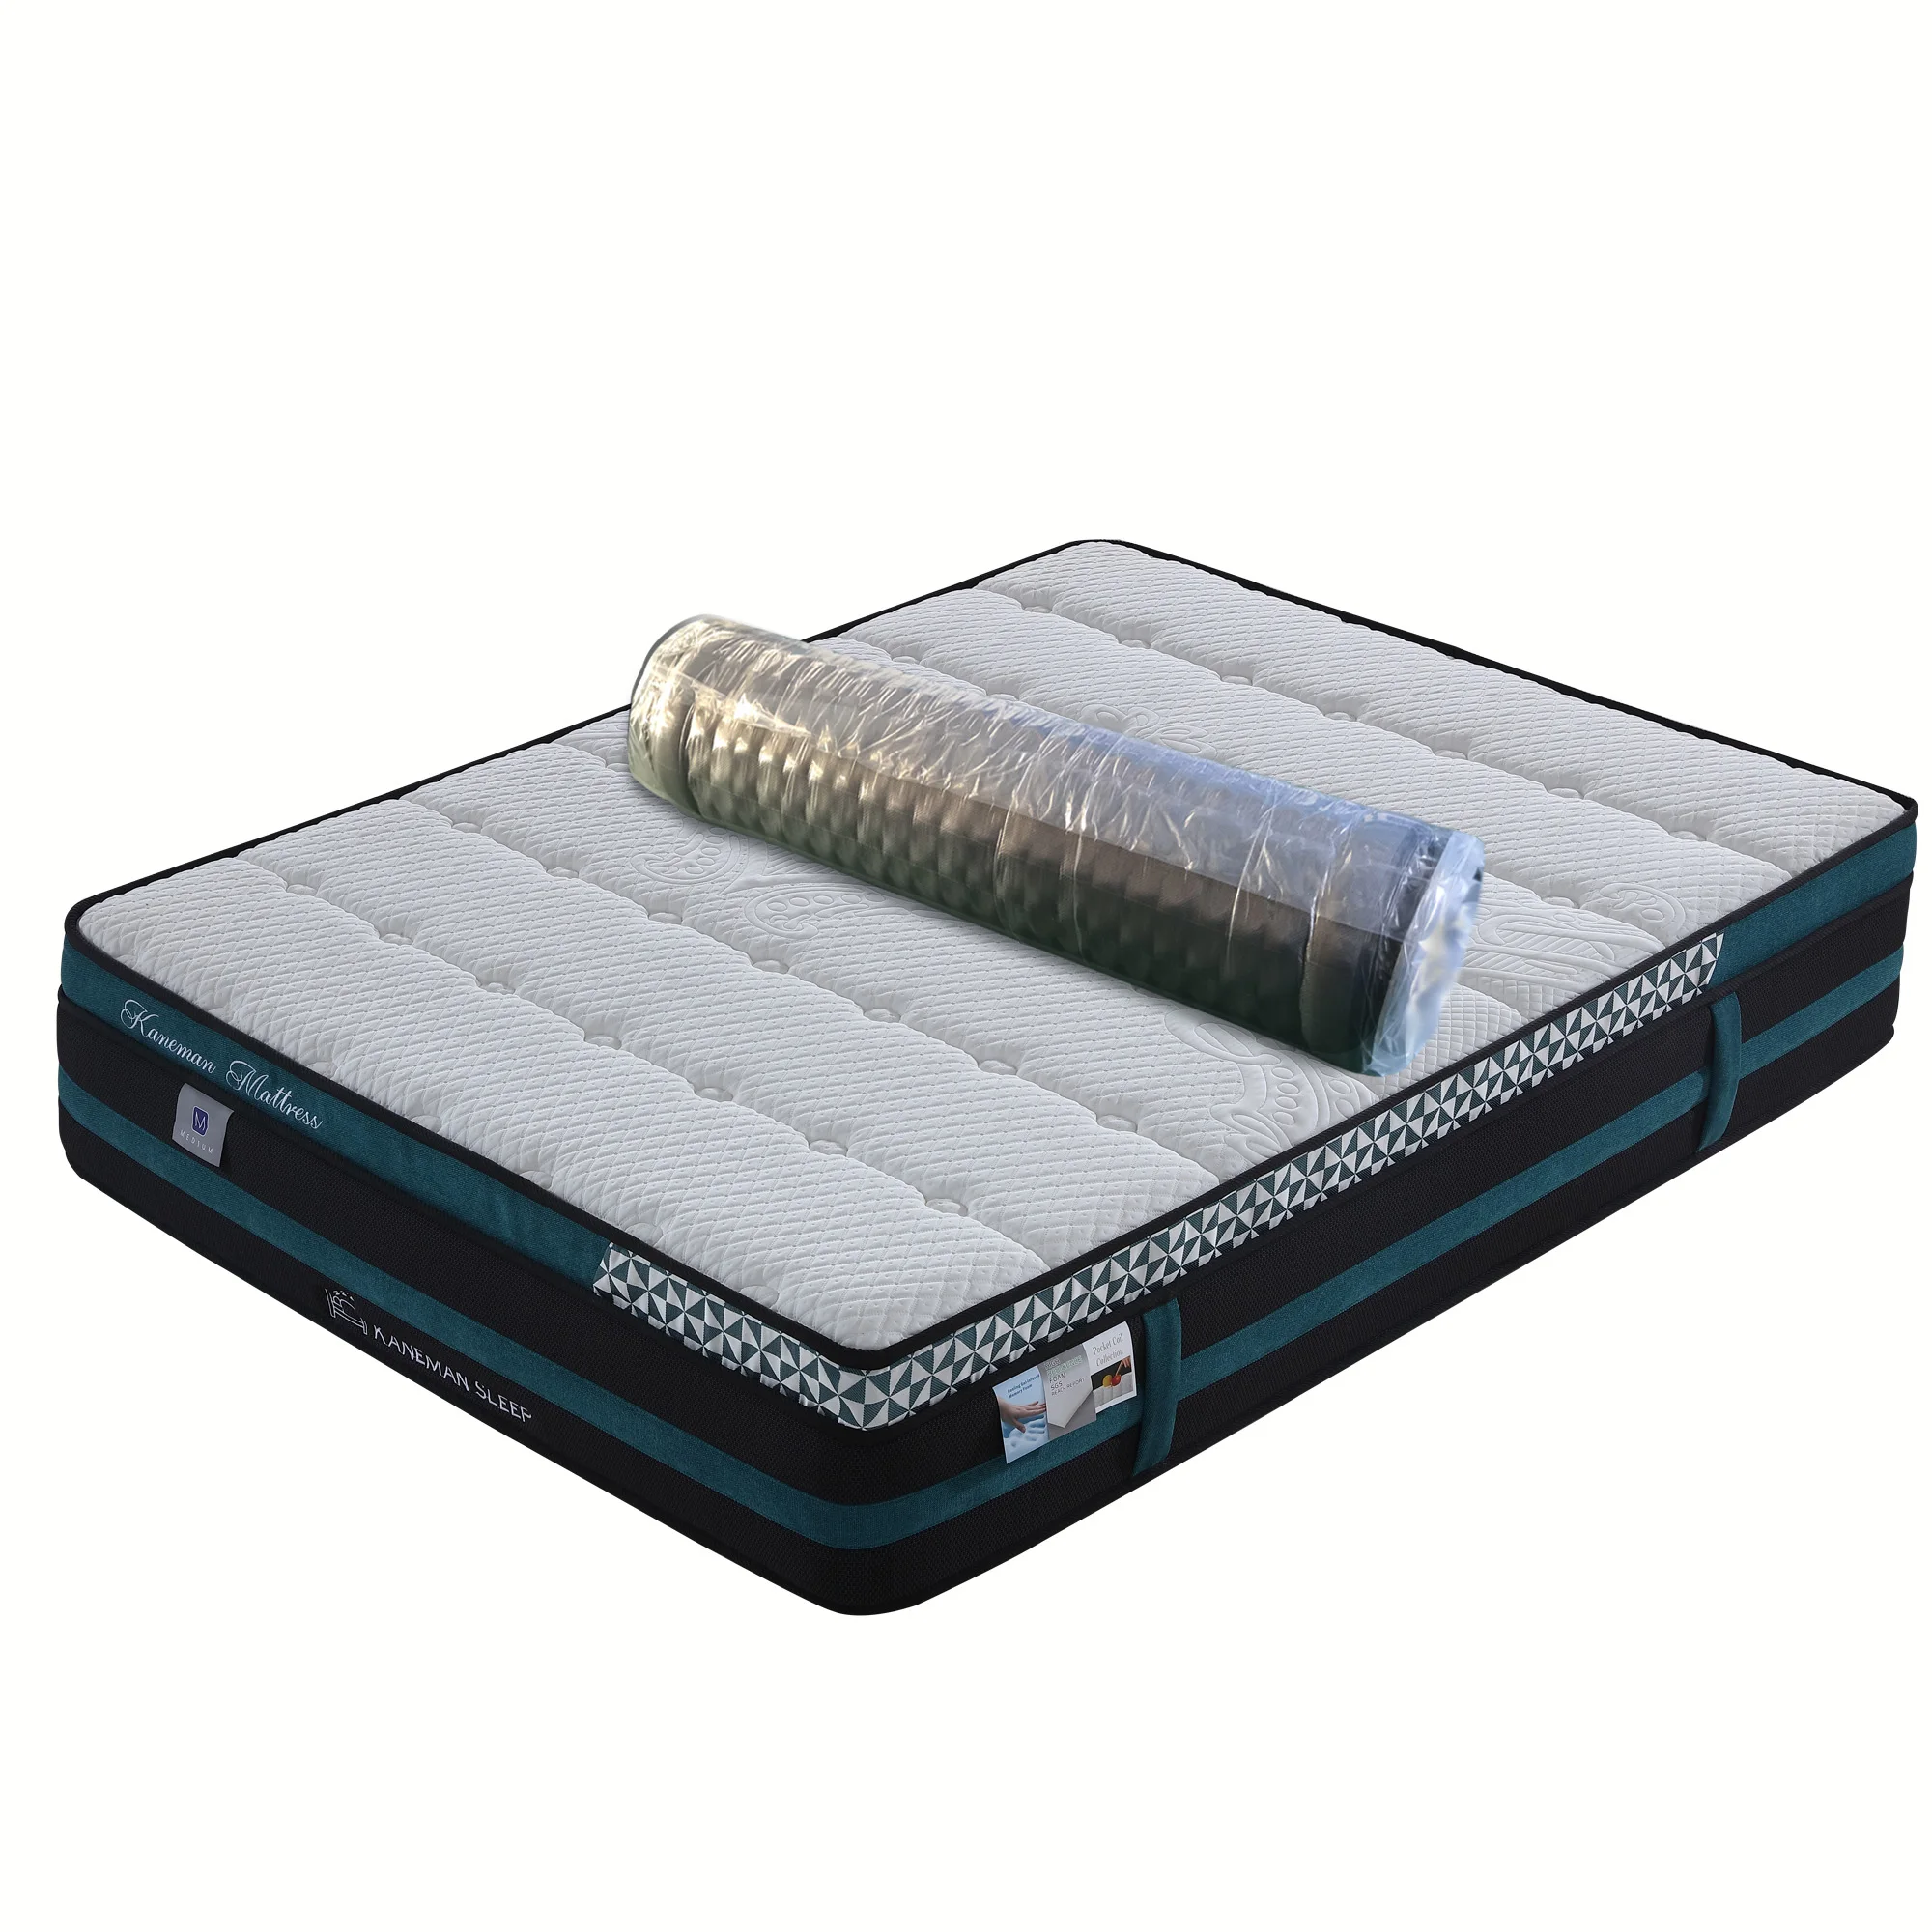 

Bedroom mattresses hybrid colchon viscoelastic memory foam pocket coil spring mattress colchones compressed in box